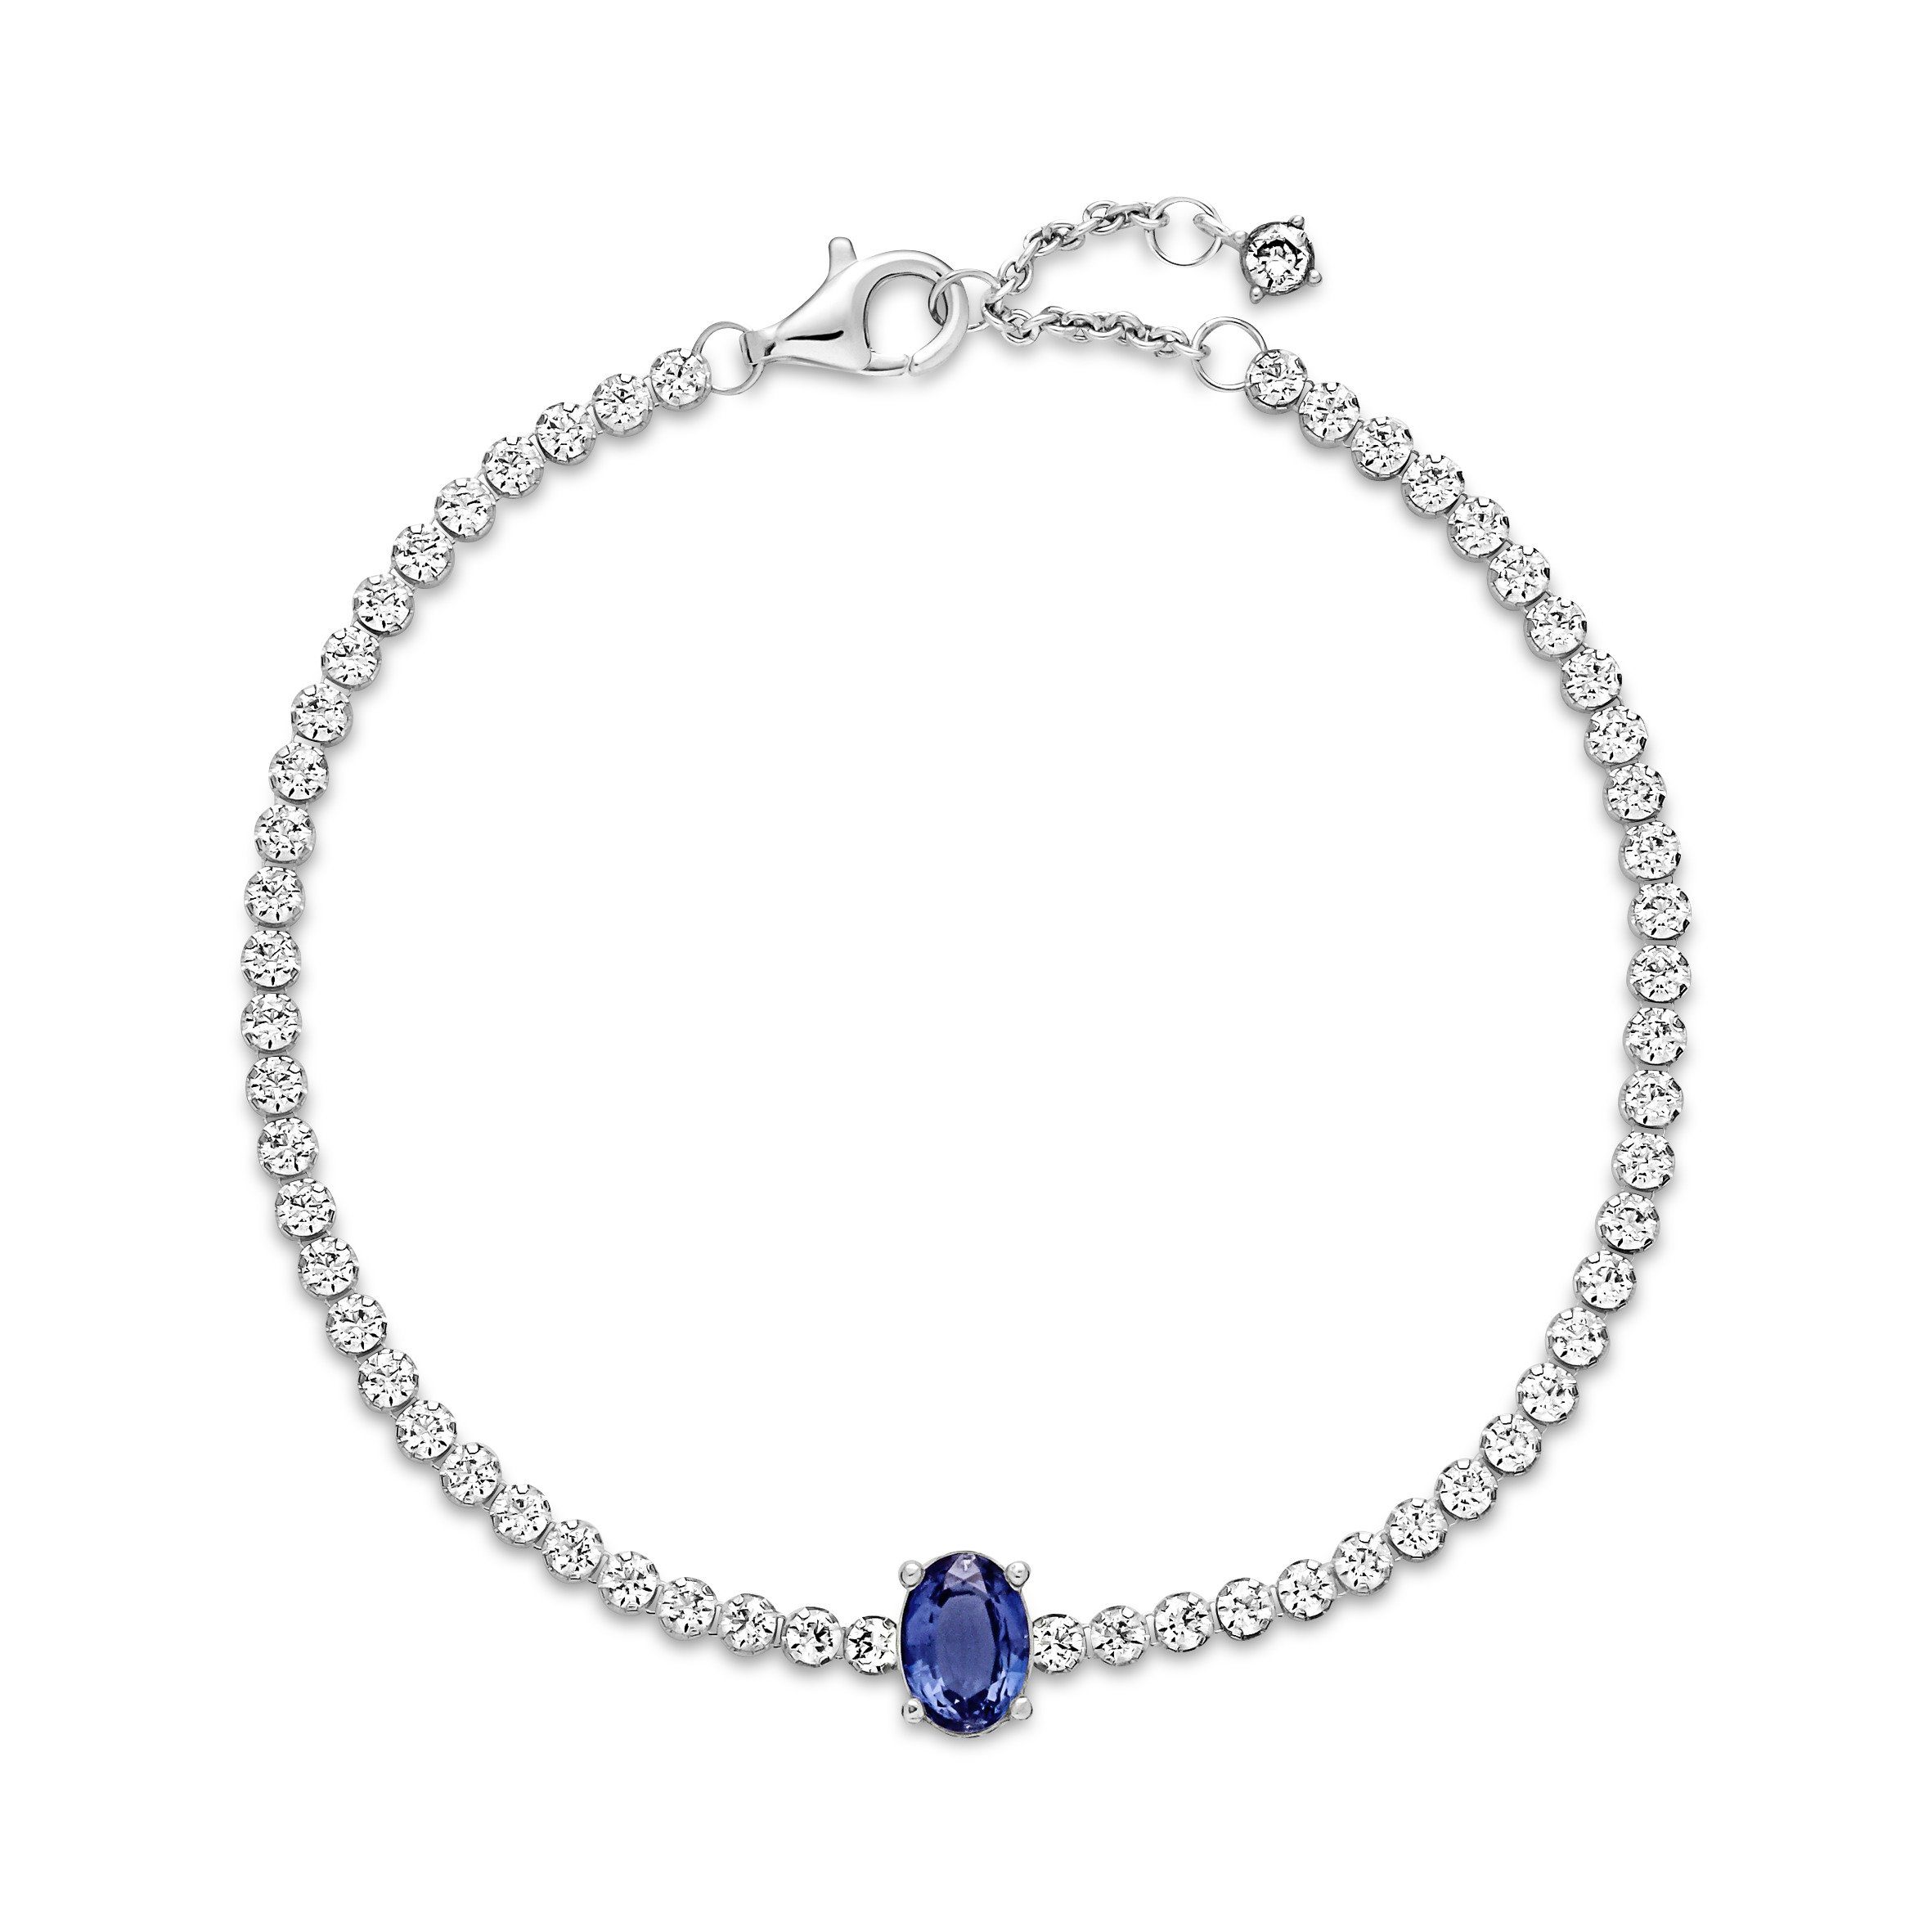 Set Bracelet chrystal Wickelarmband Pandora Tennis silver Sparkling with blue Pavé Sterling